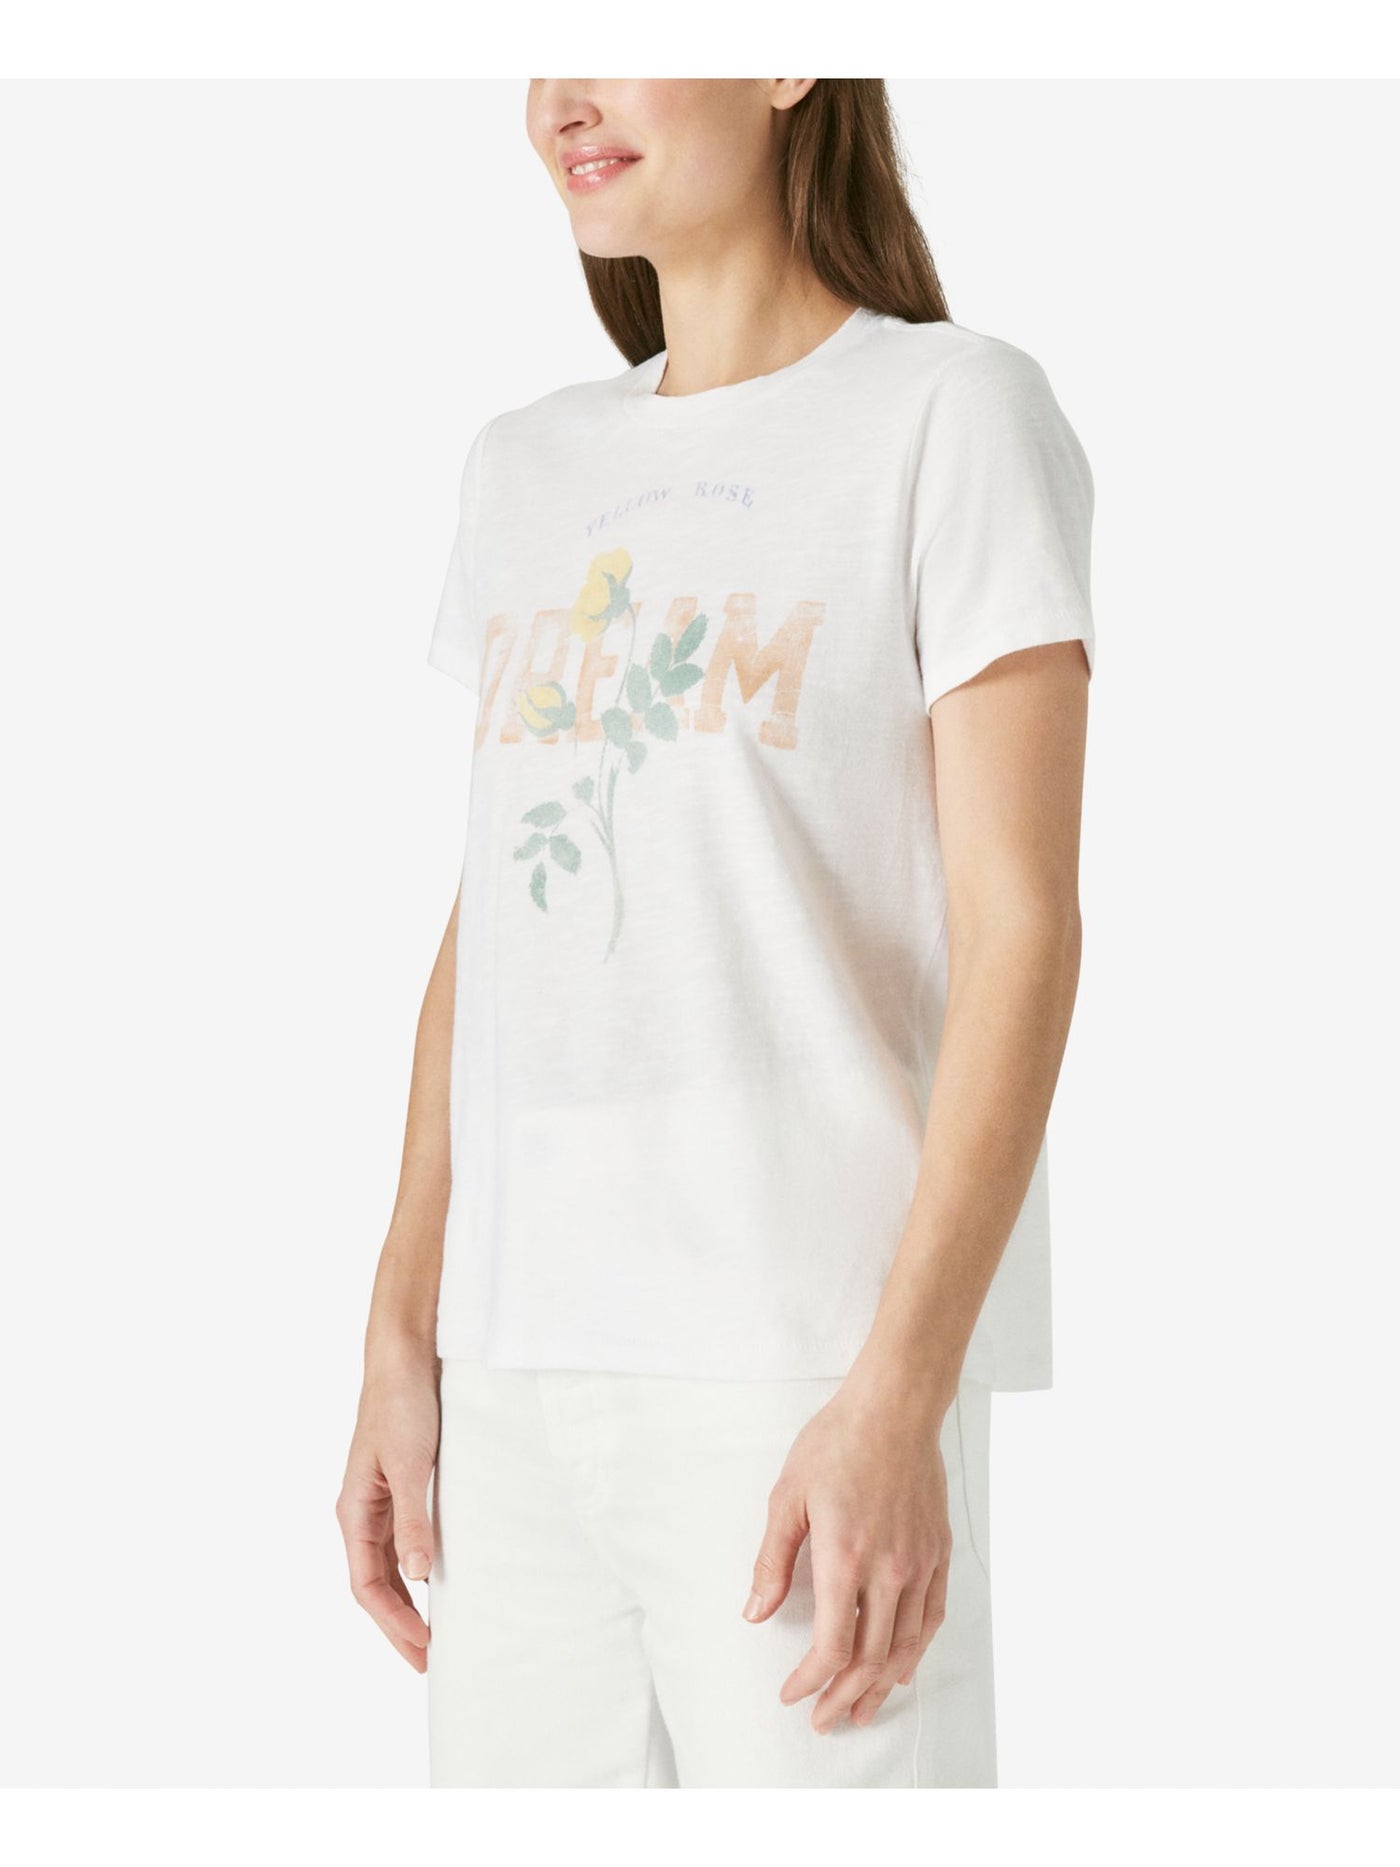 LUCKY BRAND Womens White Graphic Short Sleeve Crew Neck T-Shirt L